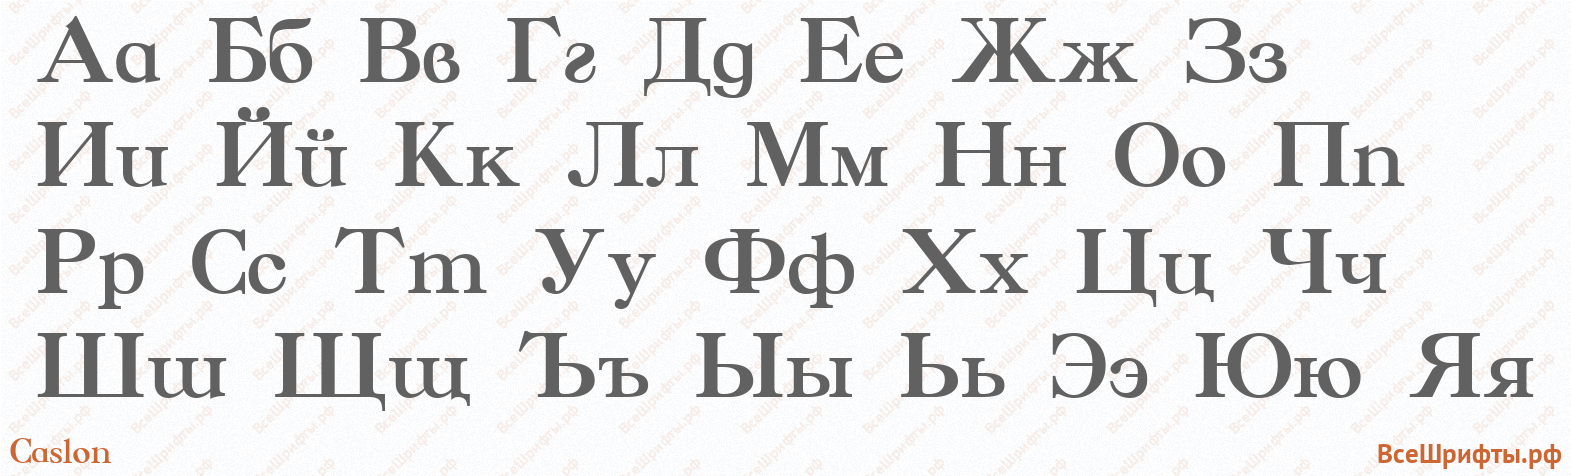 Шрифт Caslon с русскими буквами